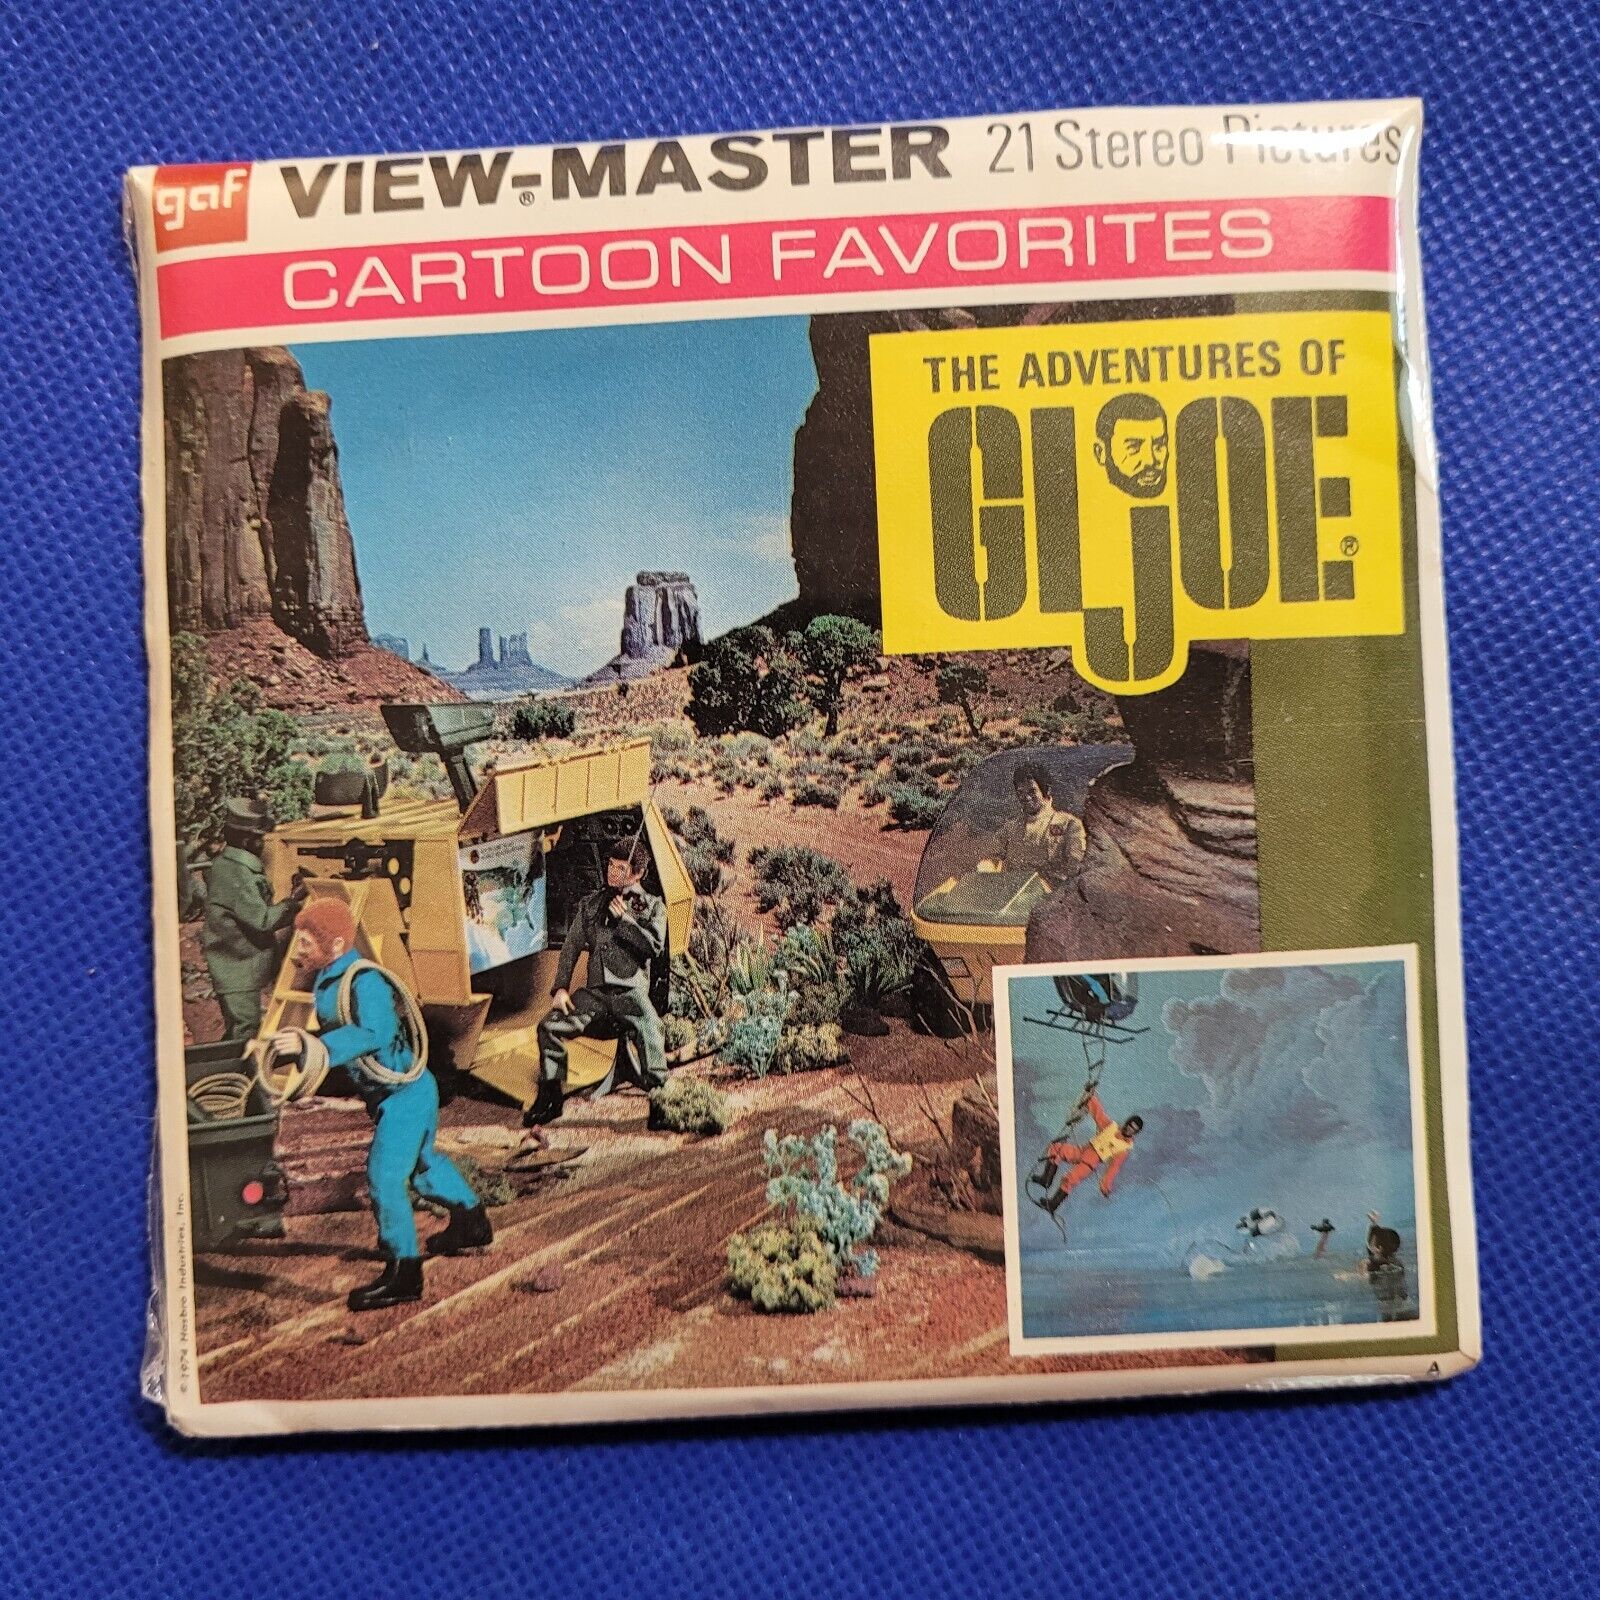 RARE SEALED Gaf B585 The Adventures of GI Joe view-master 3 Reels Cartoon Packet